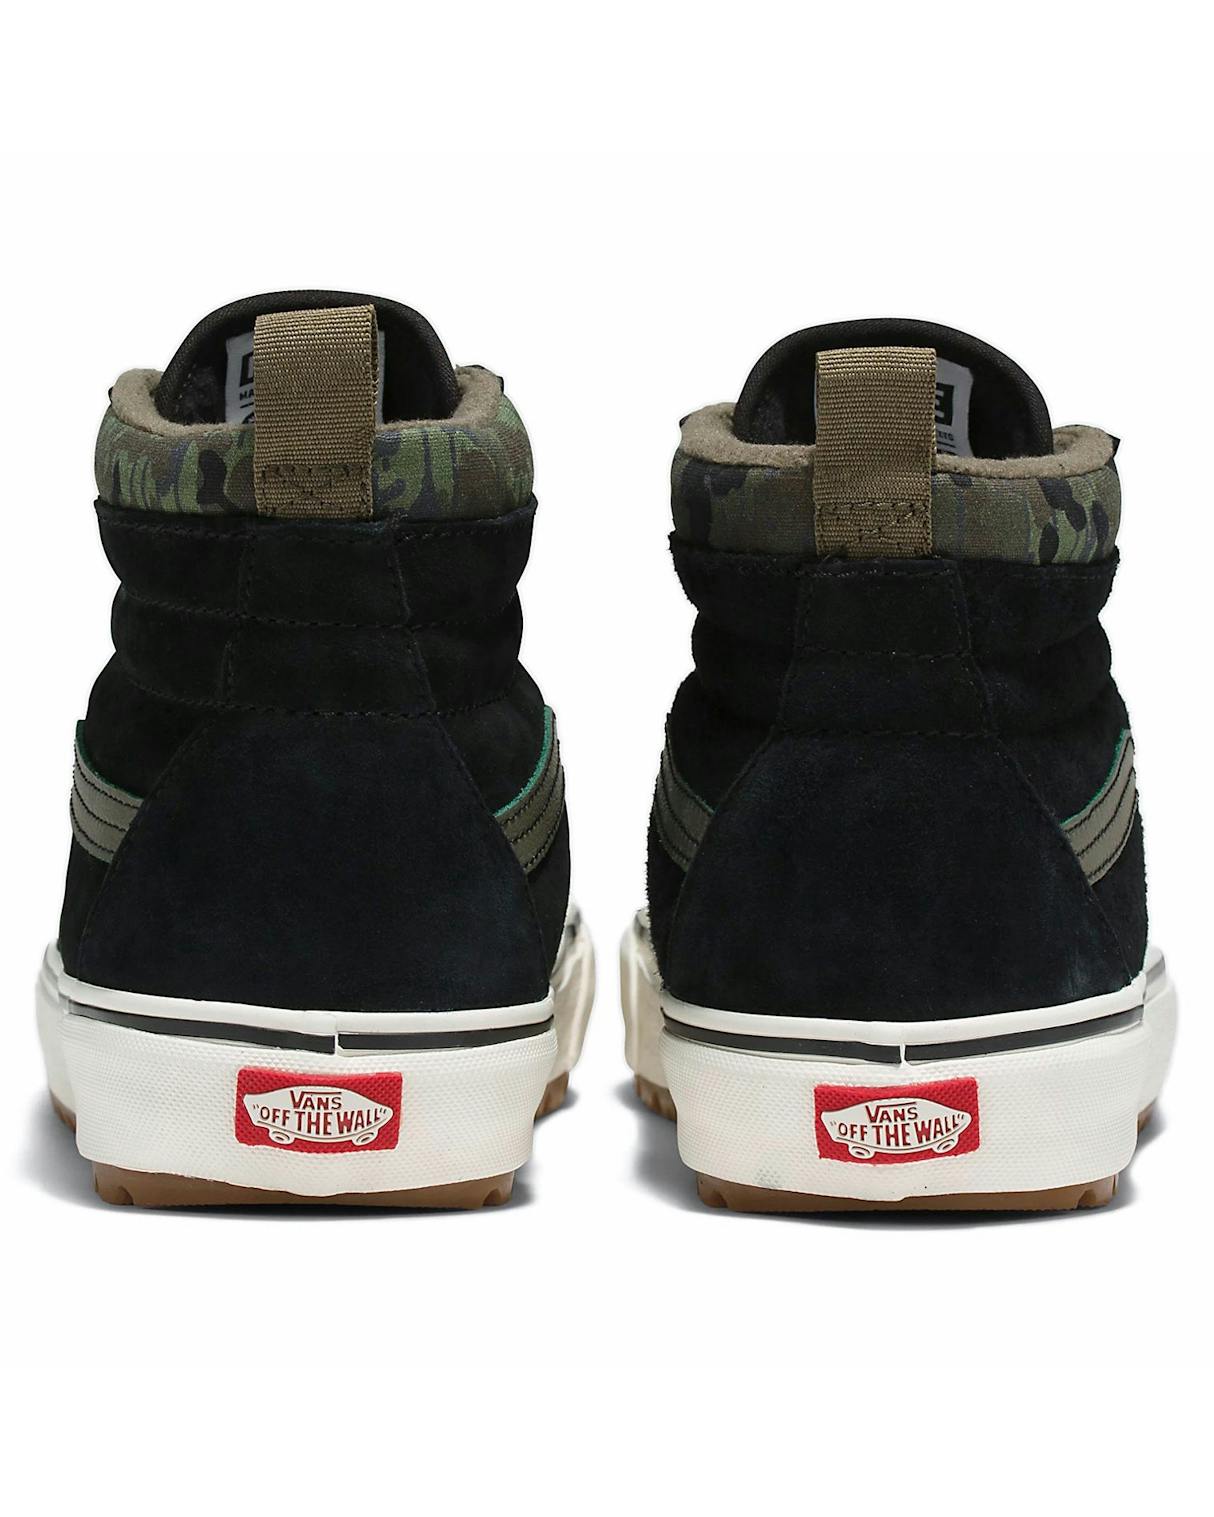 Vans SK8-Hi MTE-1 Sneaker Boot - Black/Marshmellow | Trail Sneakers |  Huckberry